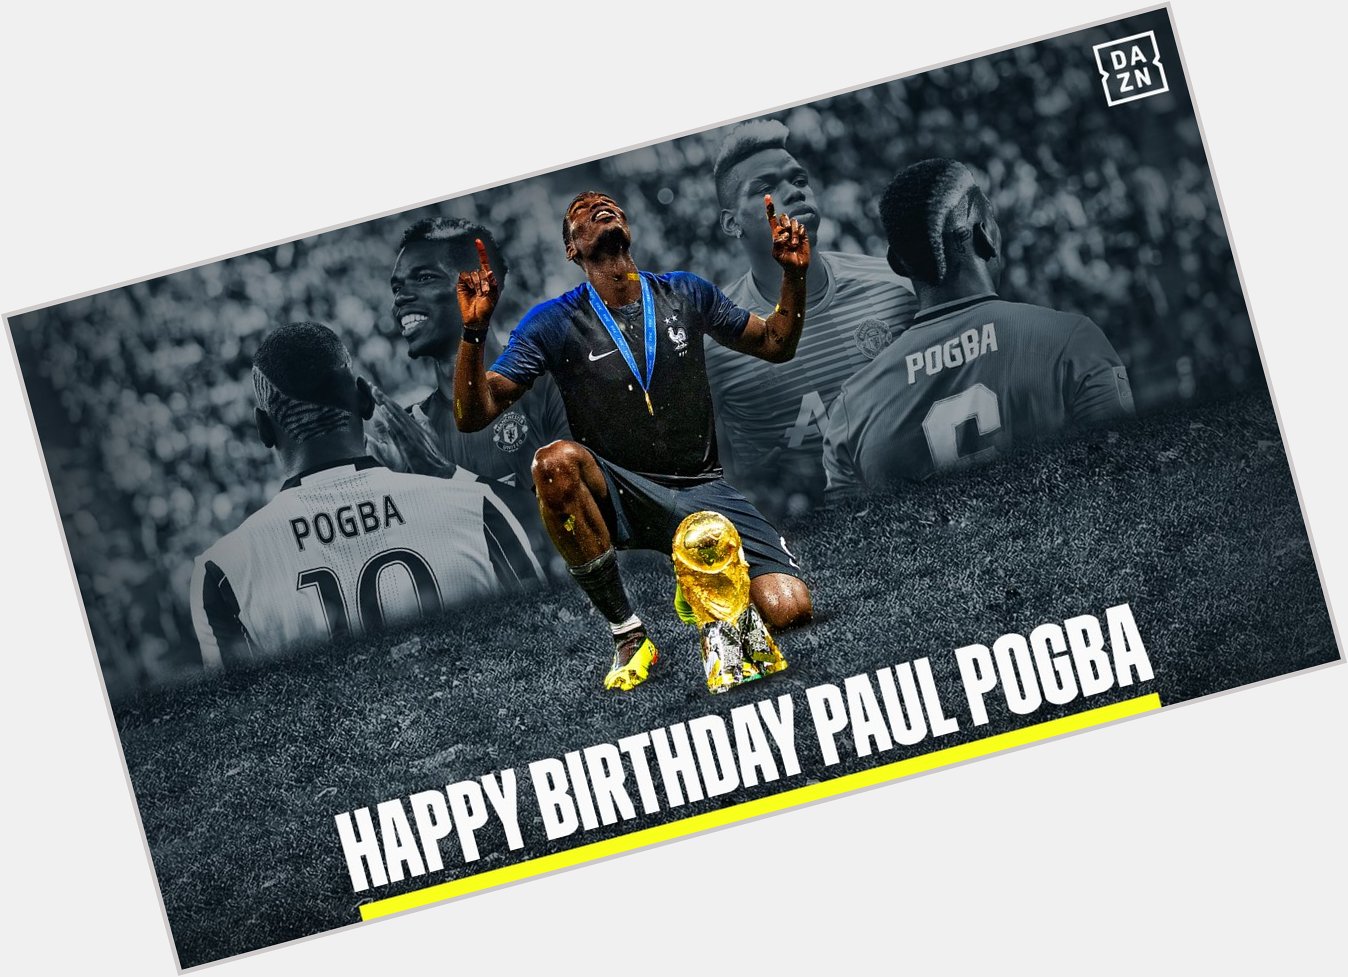 Happy birthday to World Champion Paul Pogba! 